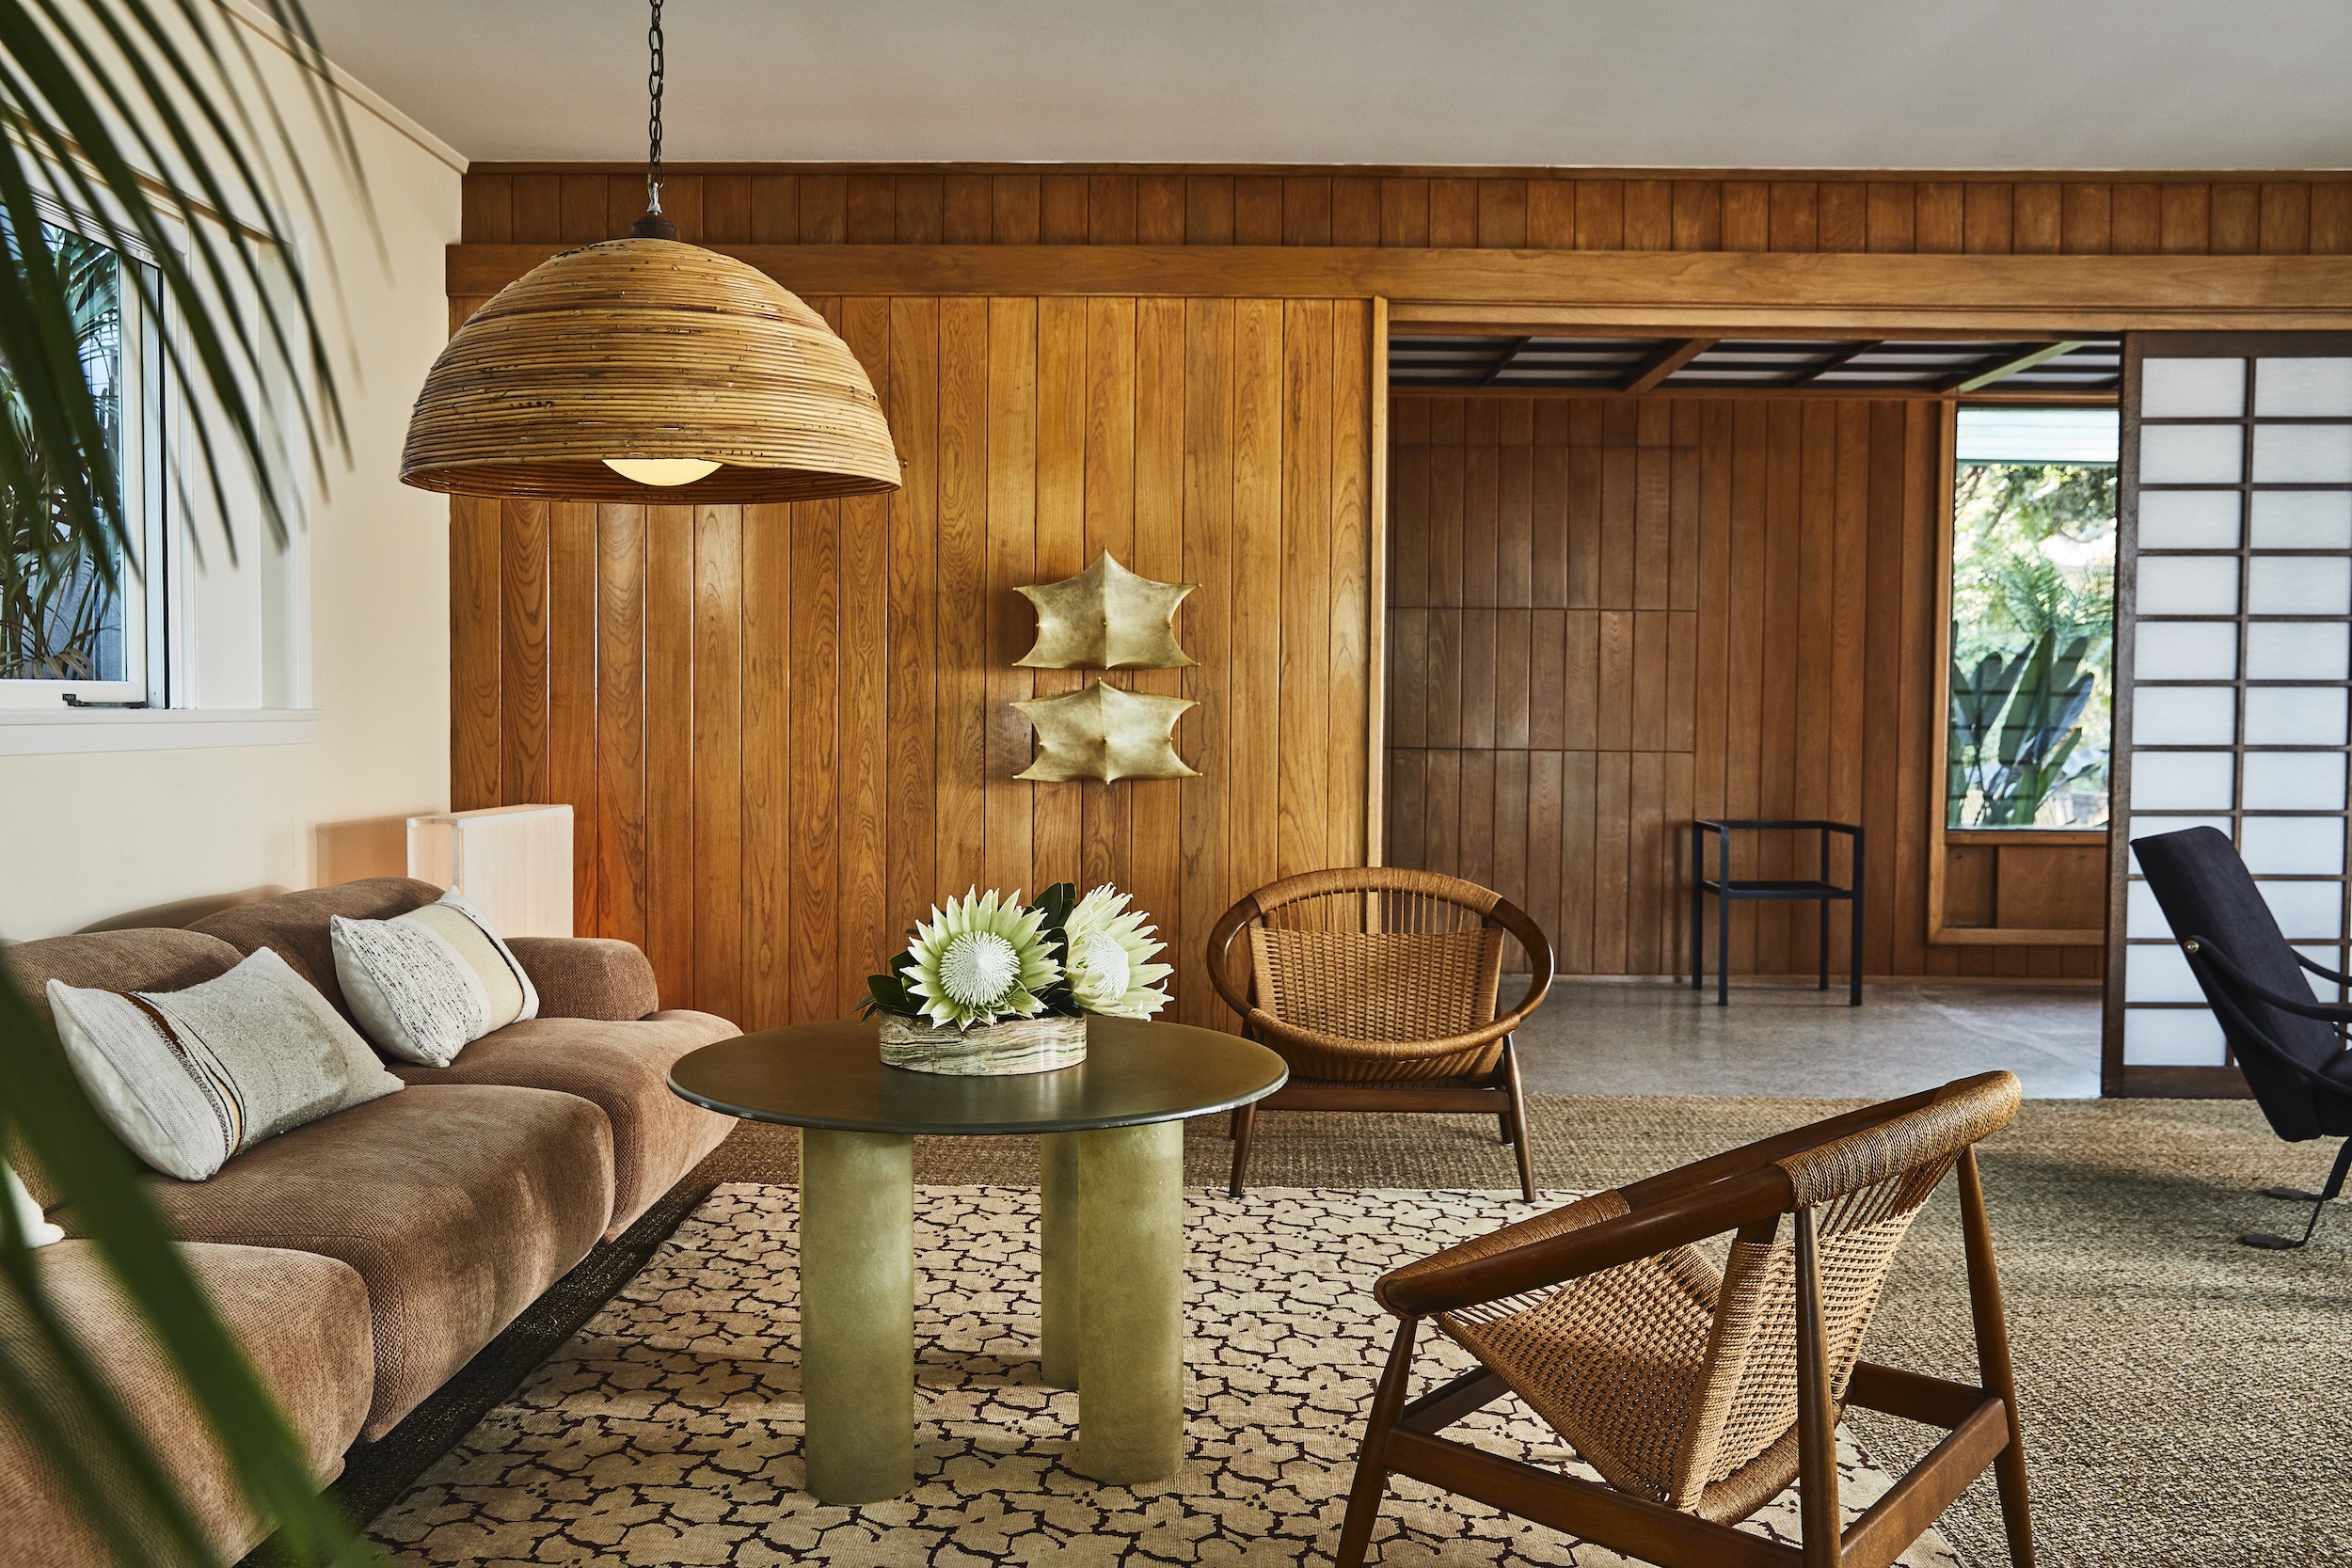 Tropical Modernism: a vintage tropical modernist interior by interior designer Kelly Wearstler in Effect Magazine